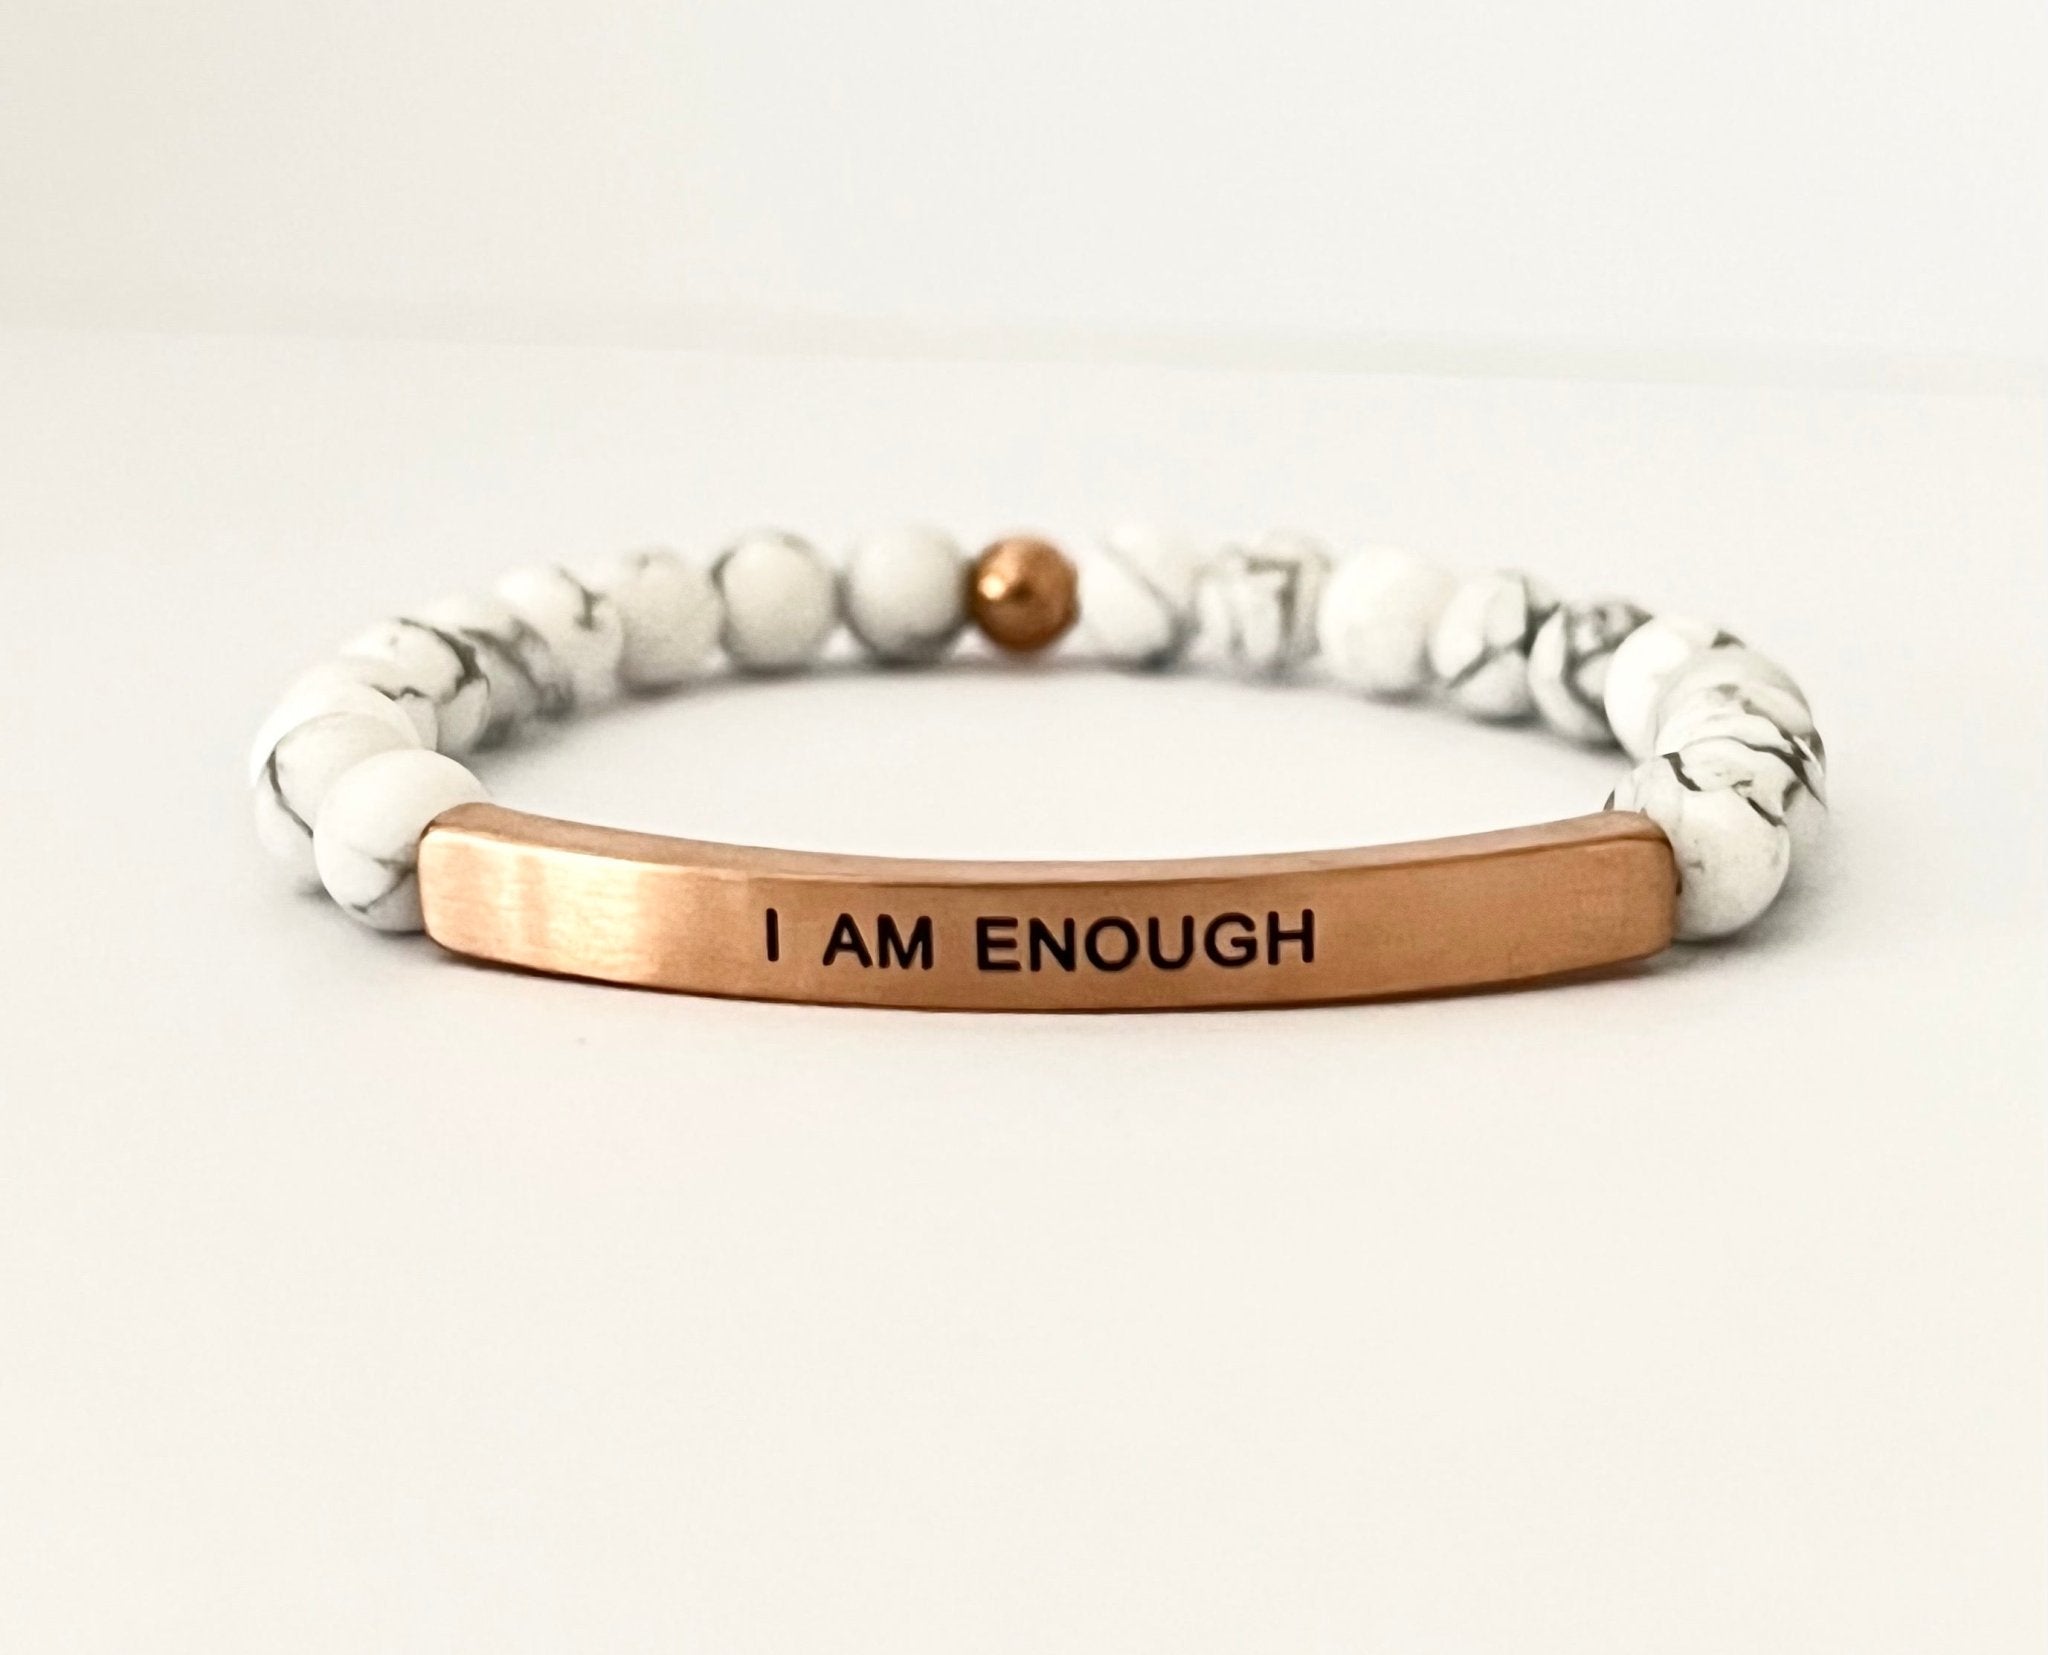 I AM ENOUGH - Inspiration Co.